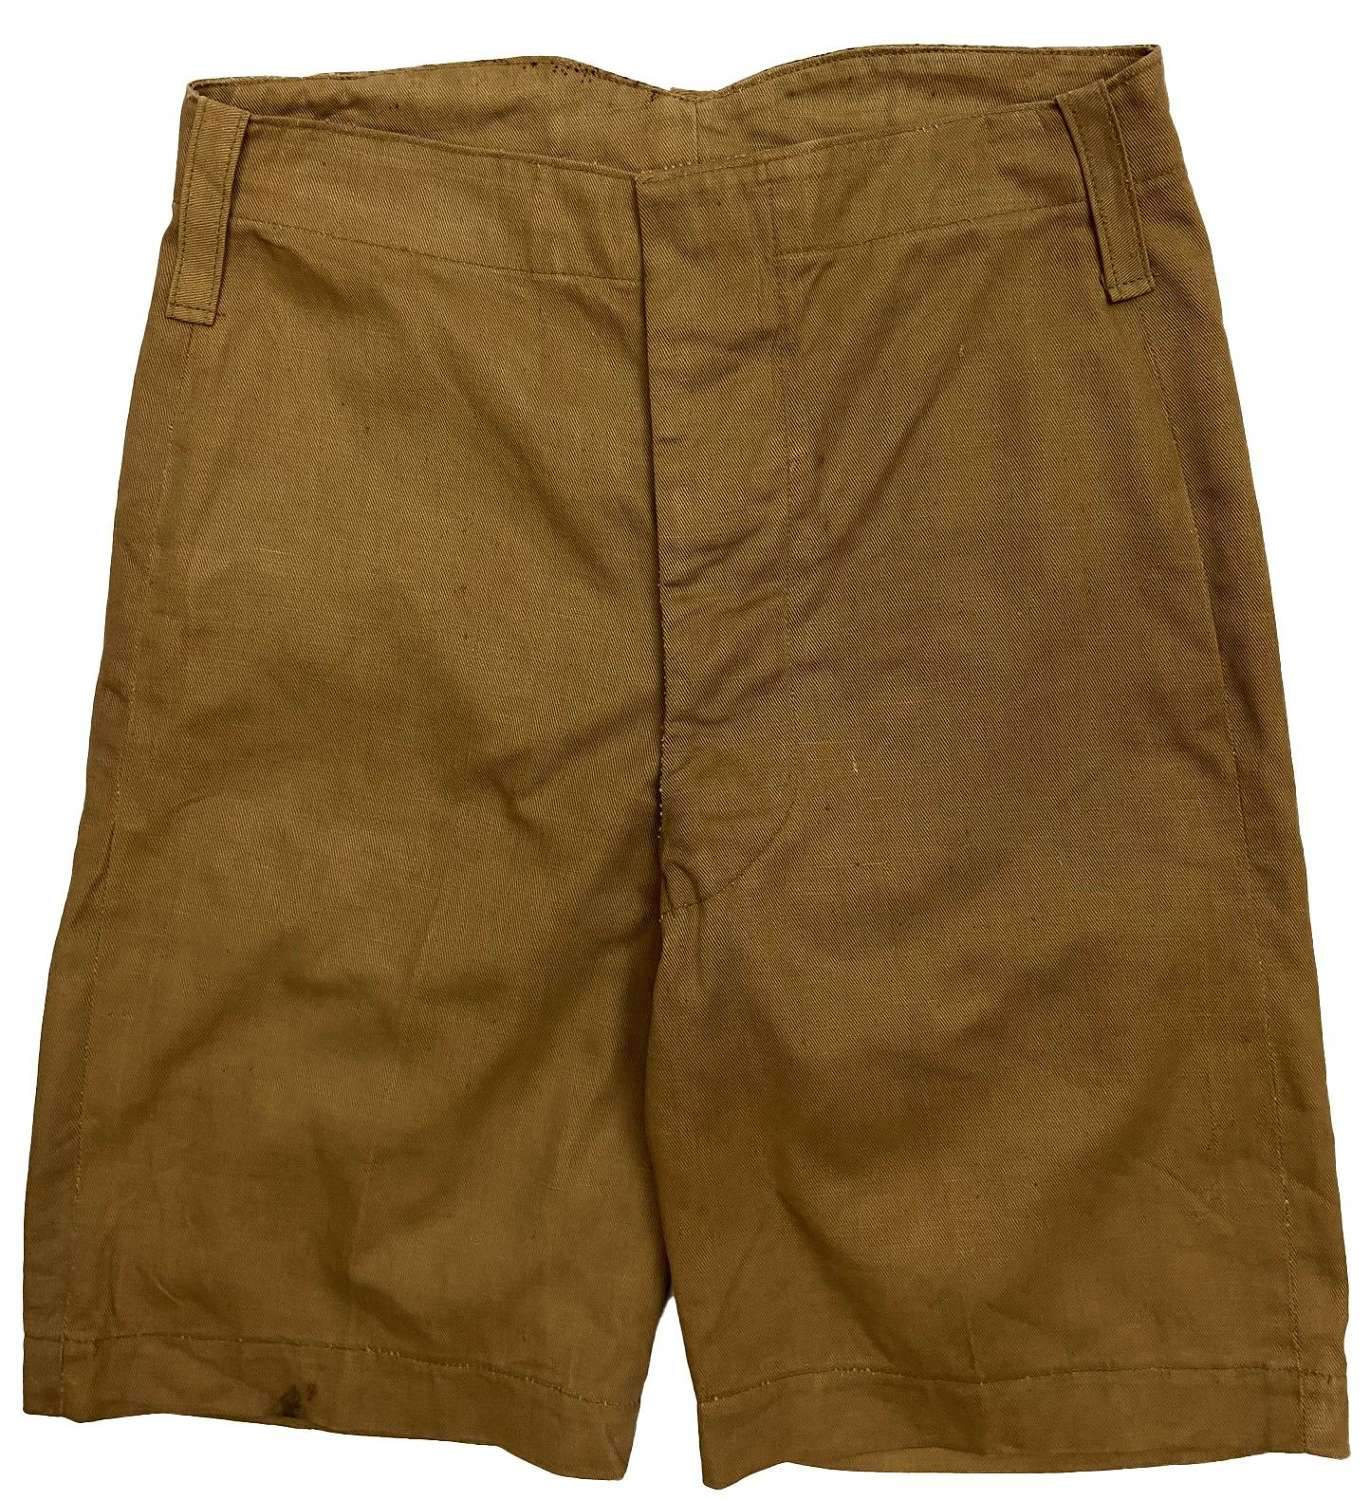 Original 1930s Khaki Drill Shorts